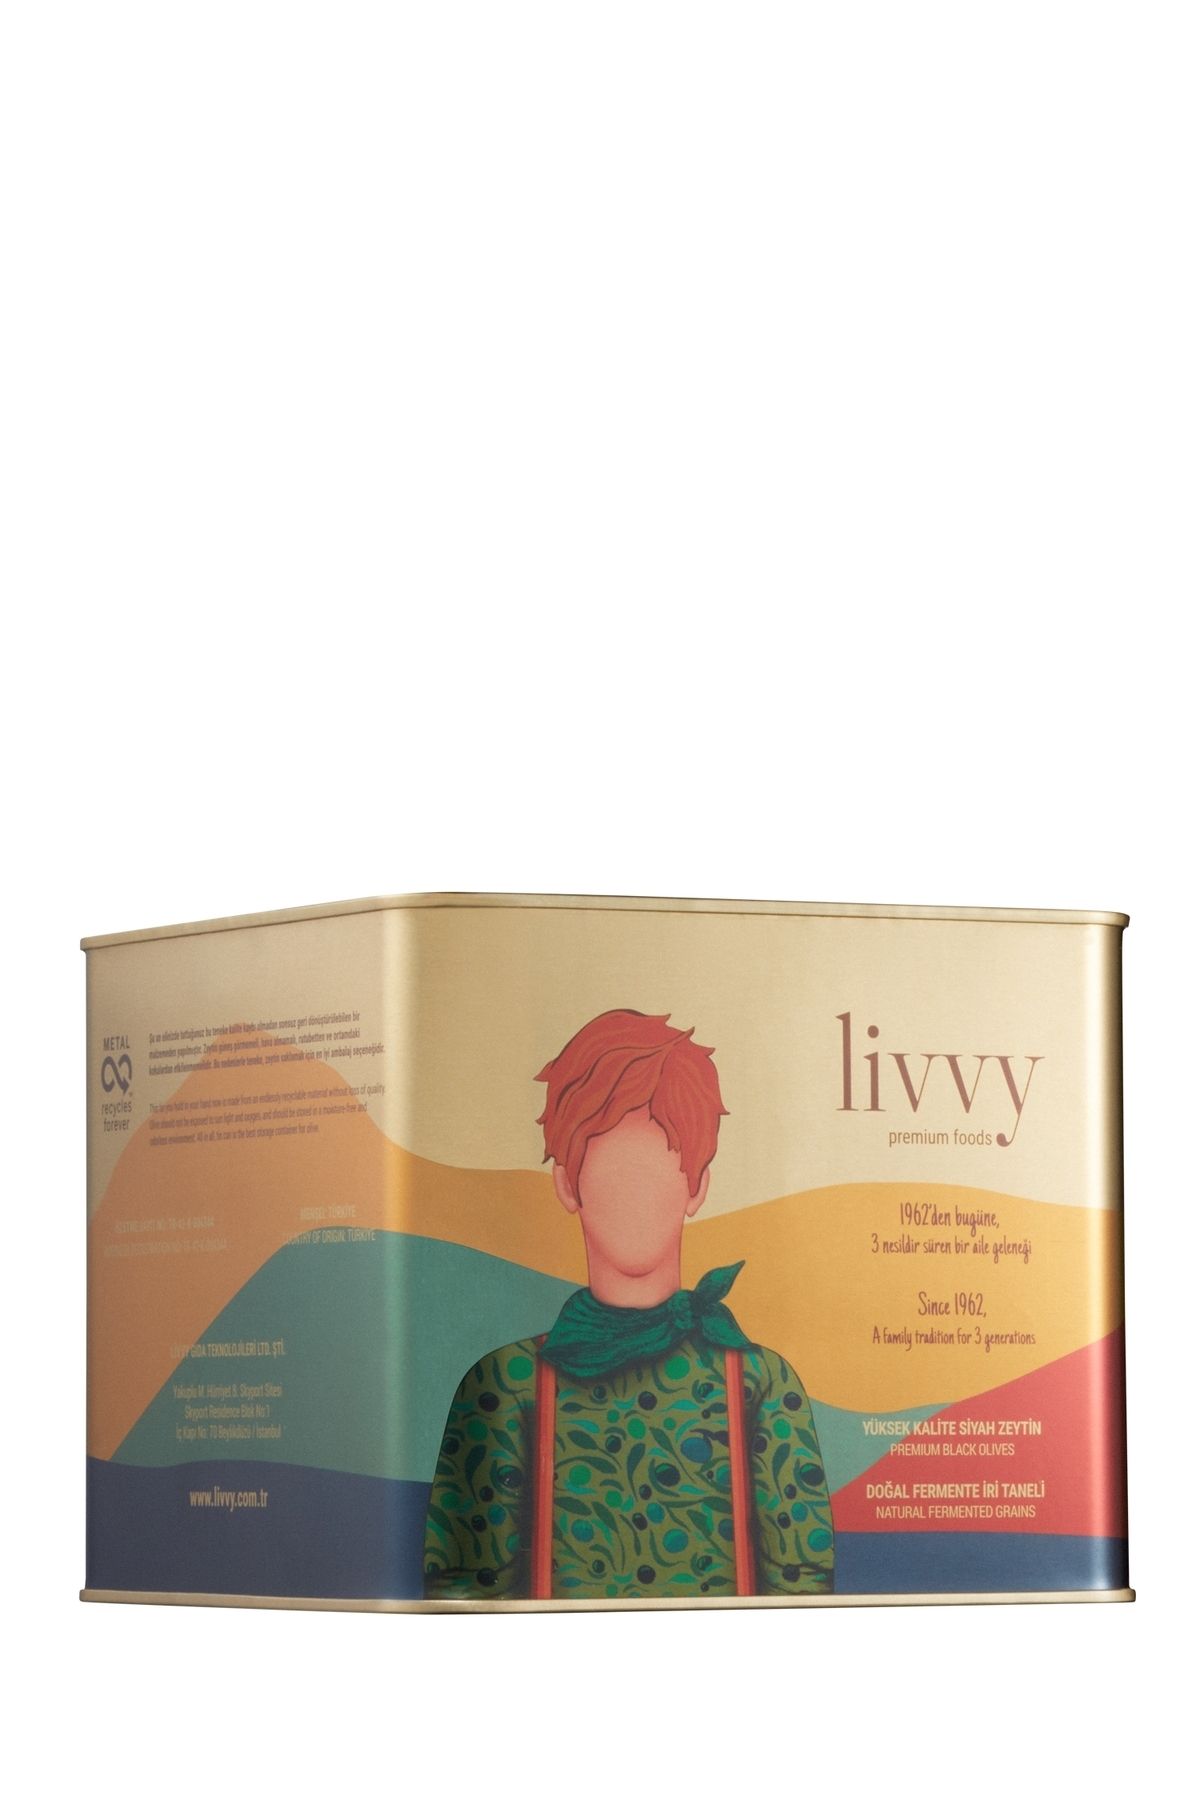 Livvy Premium Foods Livvy Doğal Fermente Iri Taneli Yüksek Kalite Siyah Zeytin 1800 G